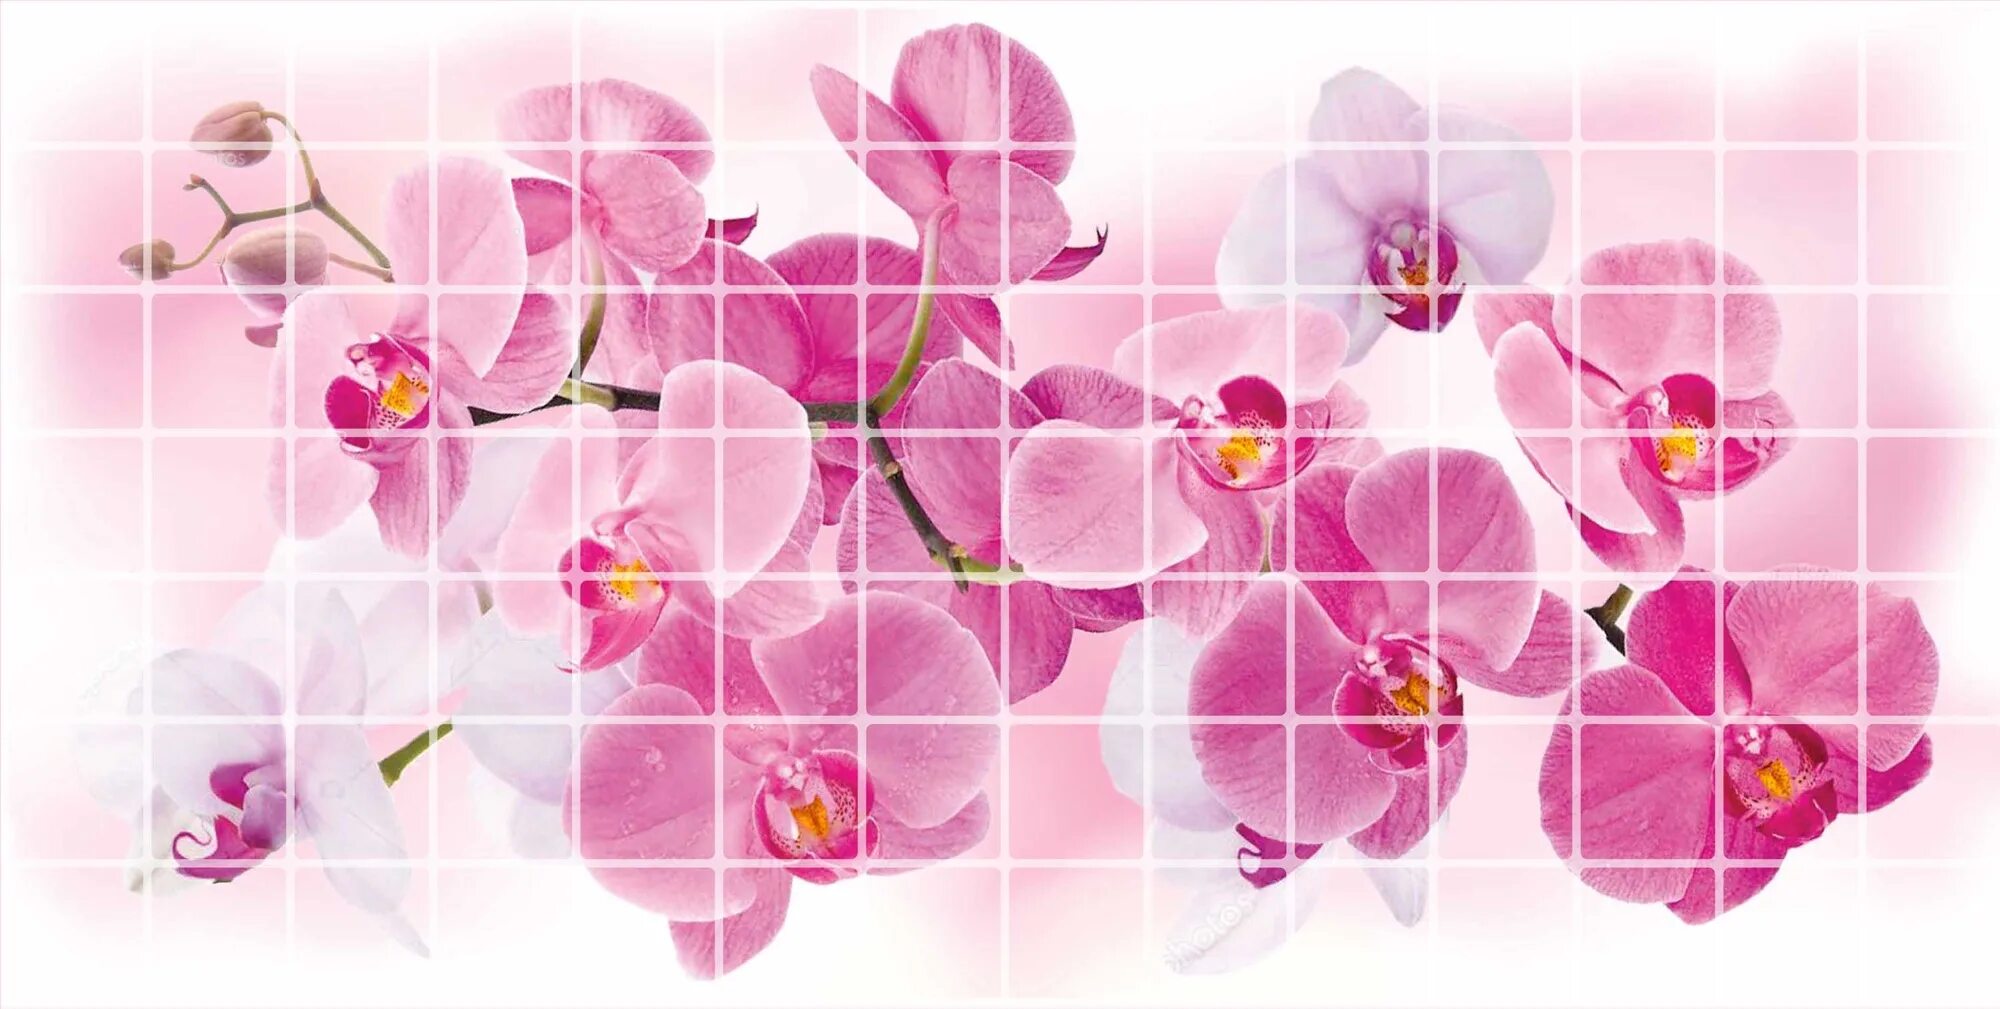 Мозаика Орхидея Розея. Панель ПВХ мозаика Орхидея Розея 480*955*0,2мм. Панель ПВХ Грейс 955*480 мозаика Орхидея Розея. Панель ПВХ мозаика Орхидея Розея. Панель пвх орхидея